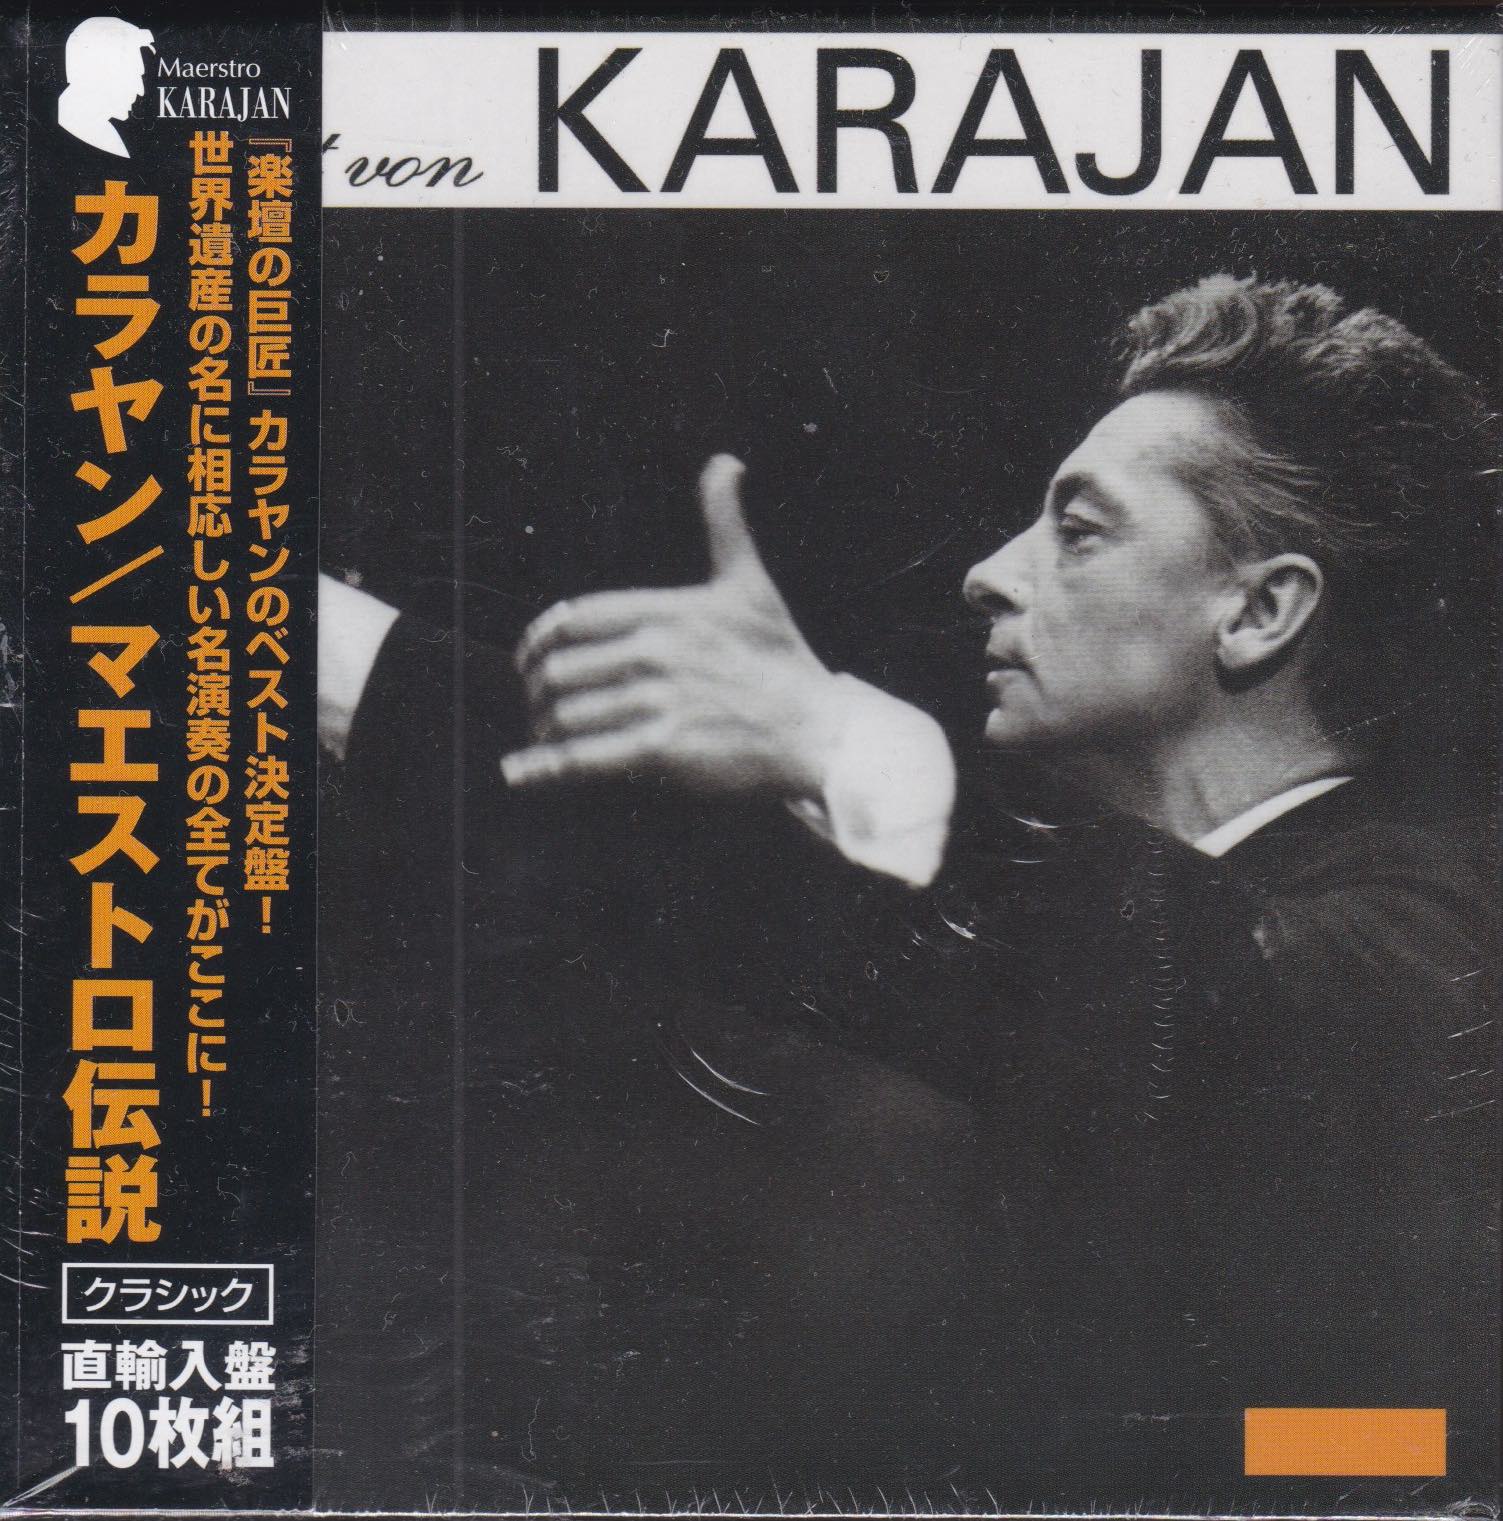 Herbert von Karajan ‎– Maestro Nobile